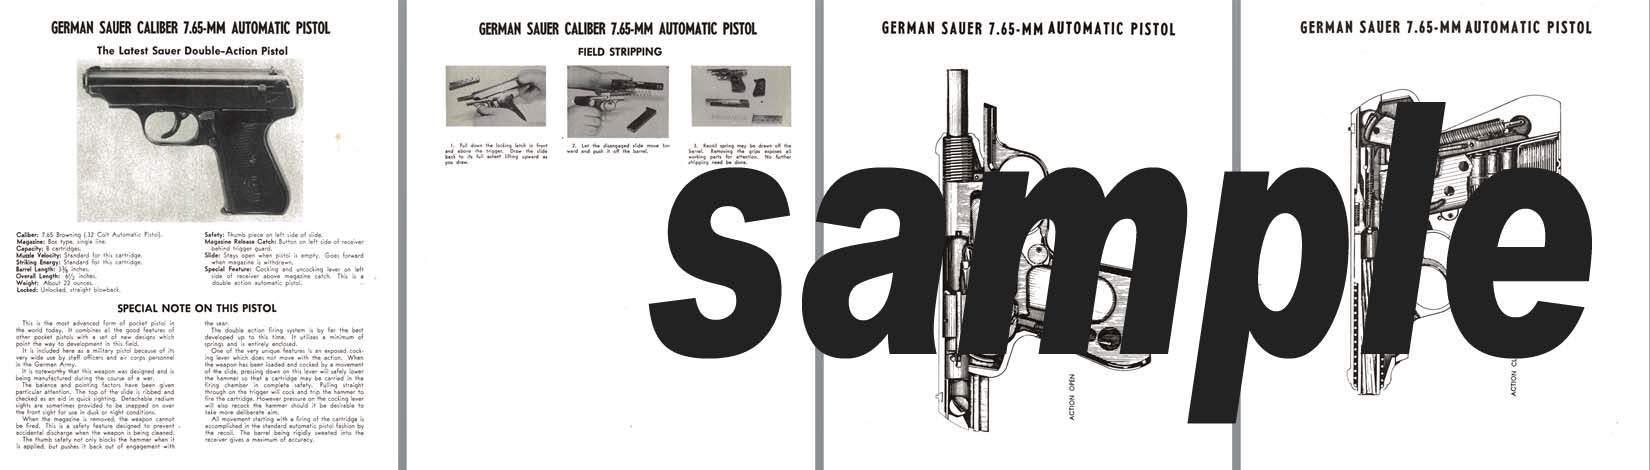 Sauer (German) Caliber 7.65mm Automatic Pistol Manual - GB-img-0